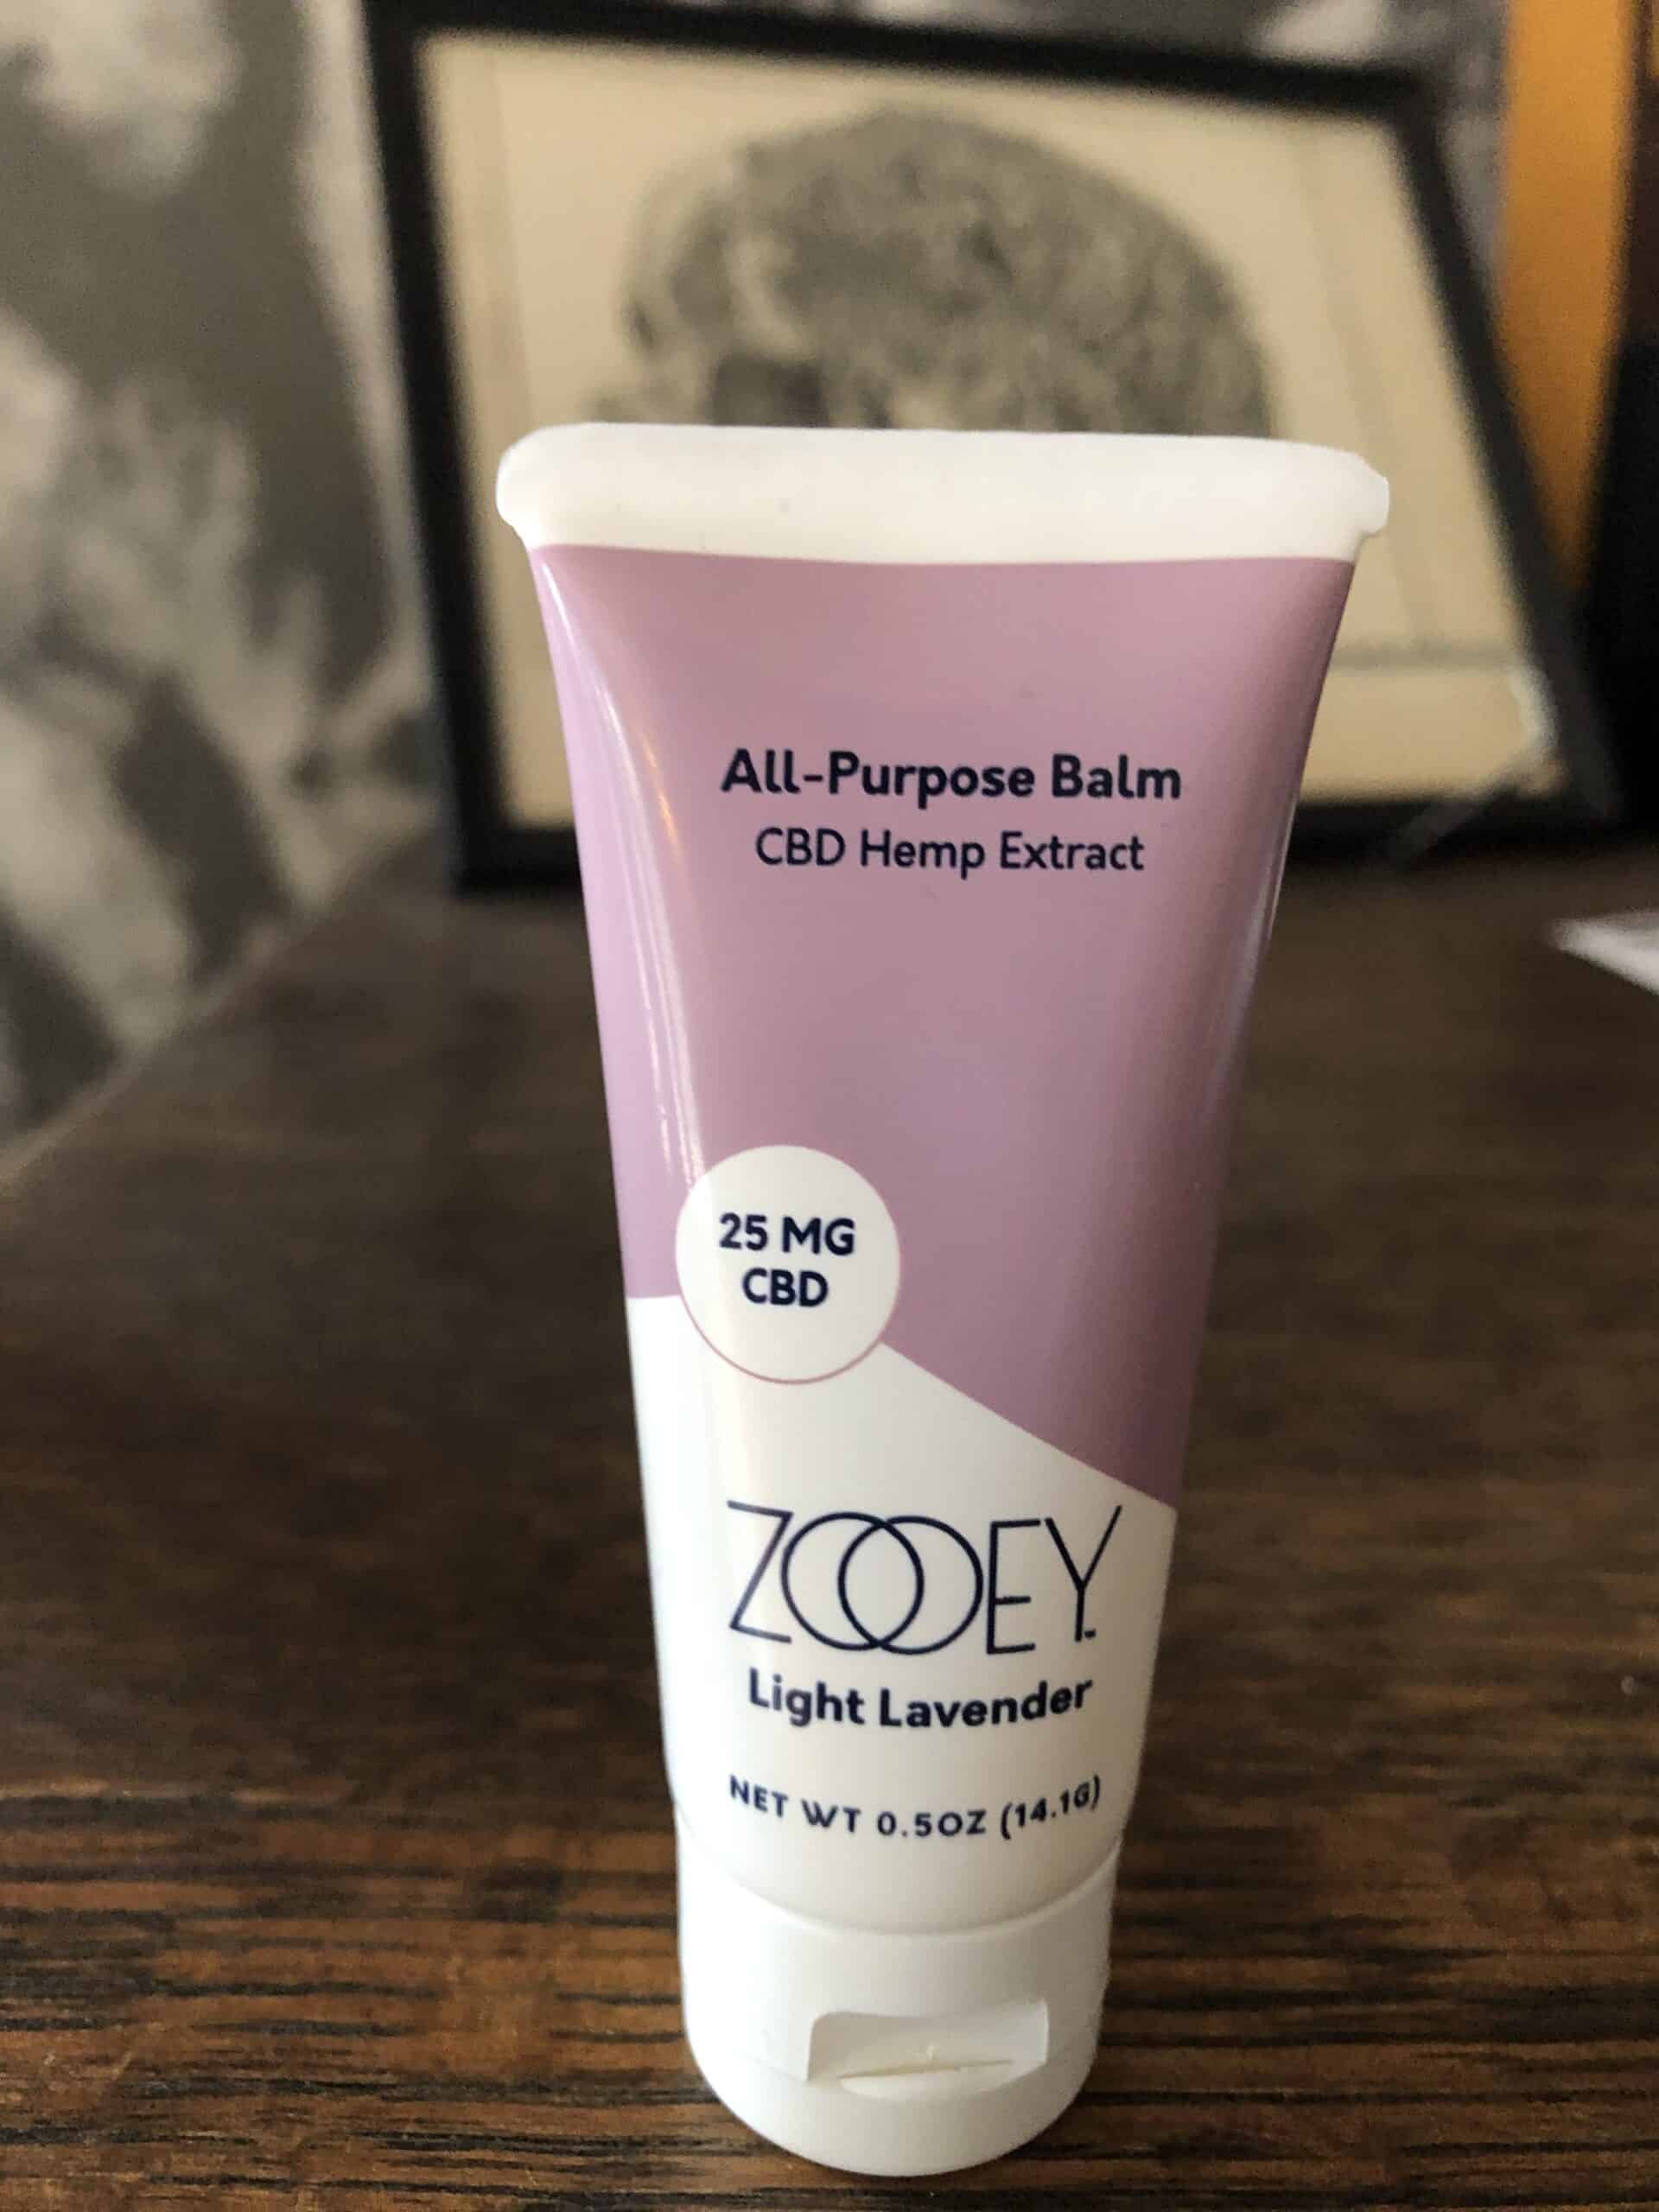 social cbd zooey lavender cbd all purpose balm save on cannabis beauty shot